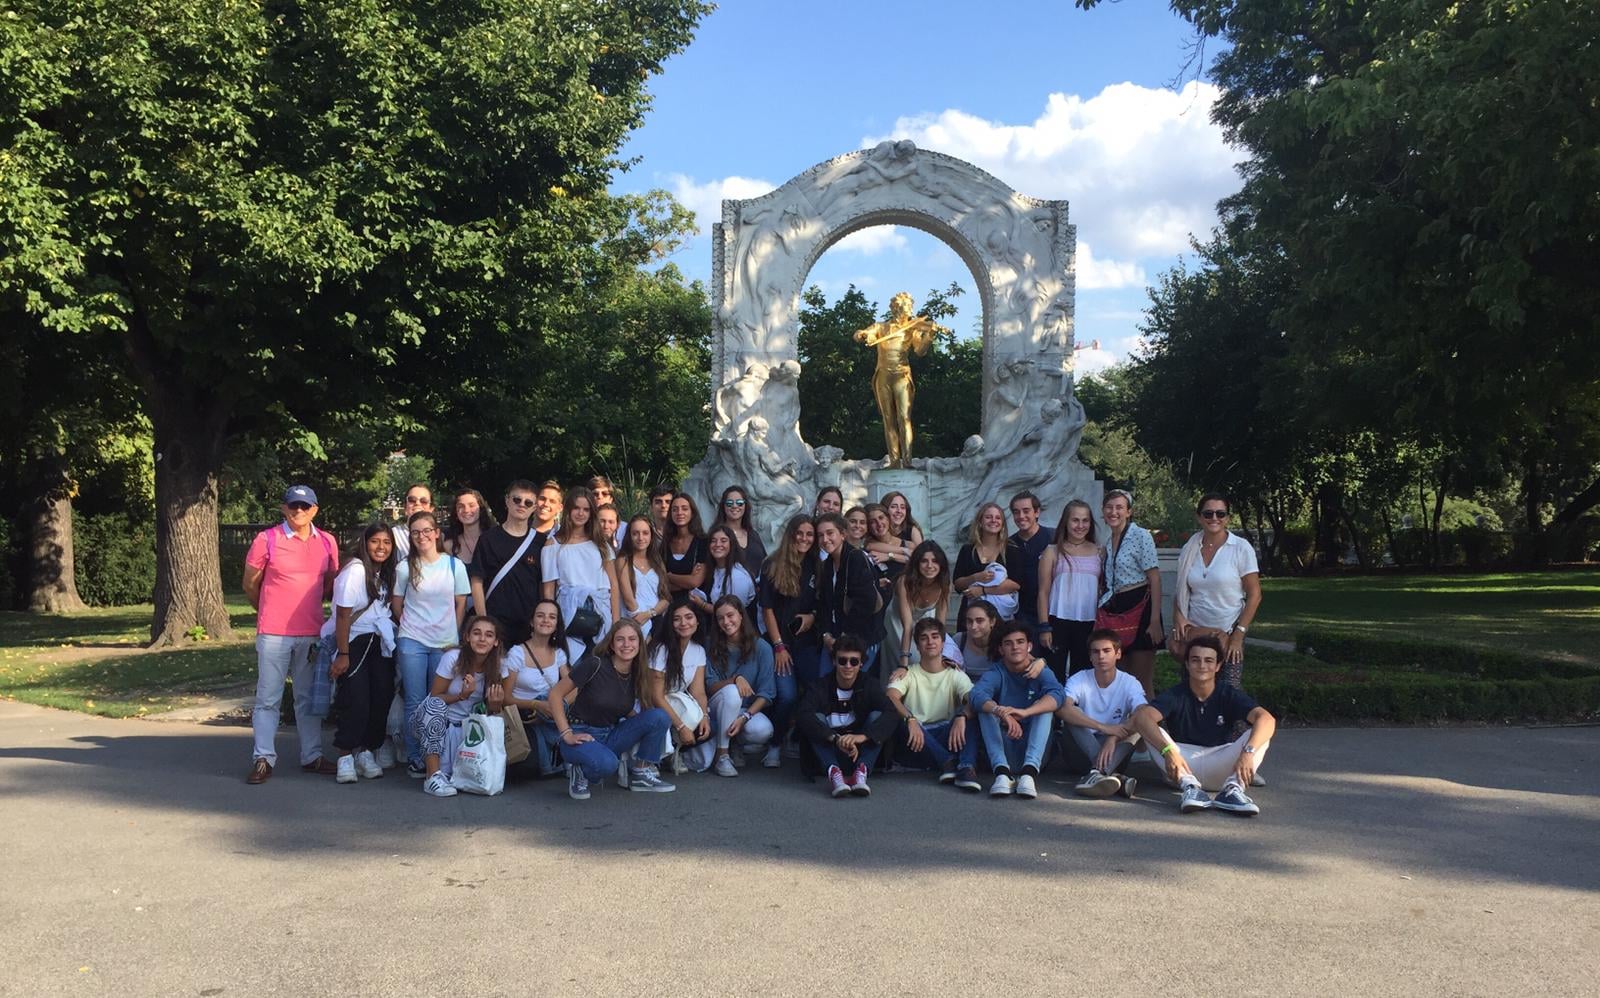 Los alumnos posan junto a la estatua de Mozart